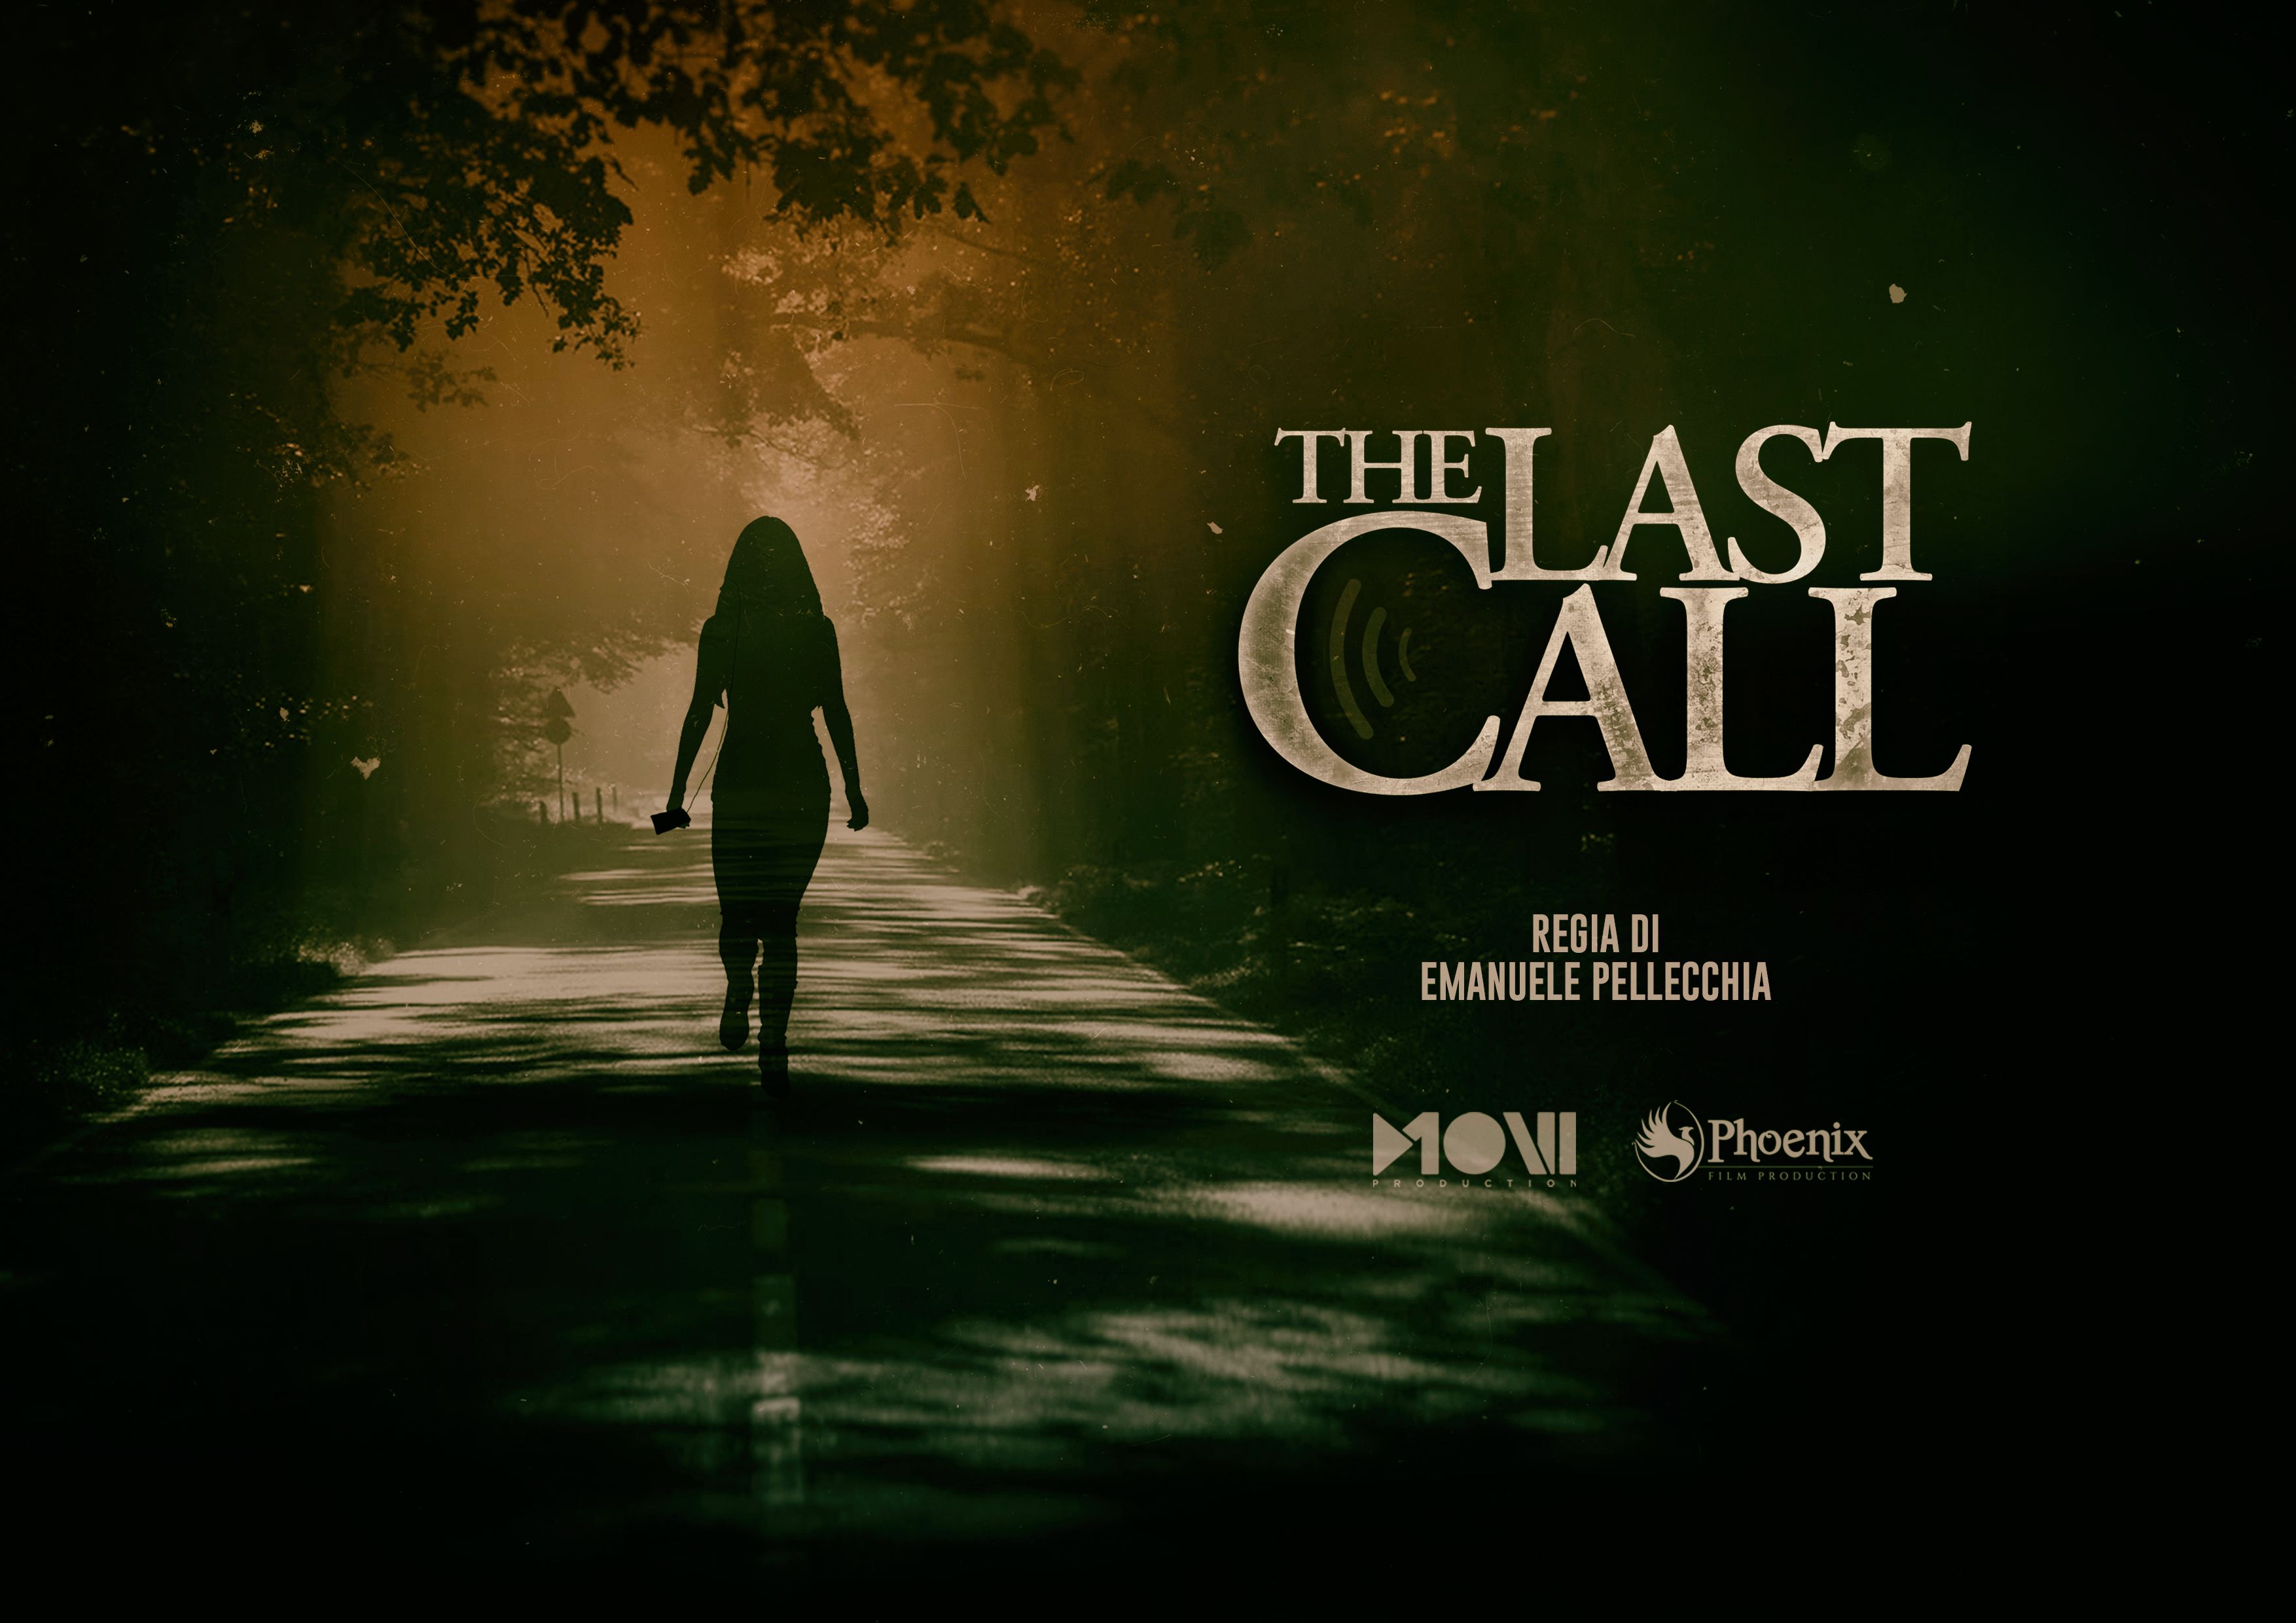 The last call